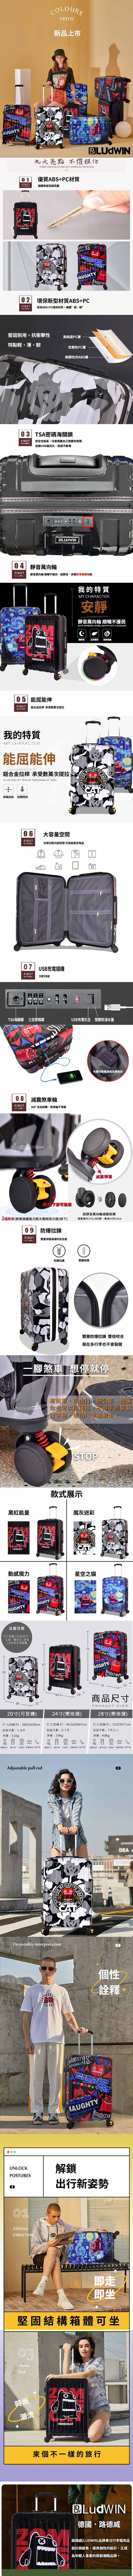 【LUDWIN 路德威】德國路德威設計款行李箱 USB可充電設計 20吋-28吋